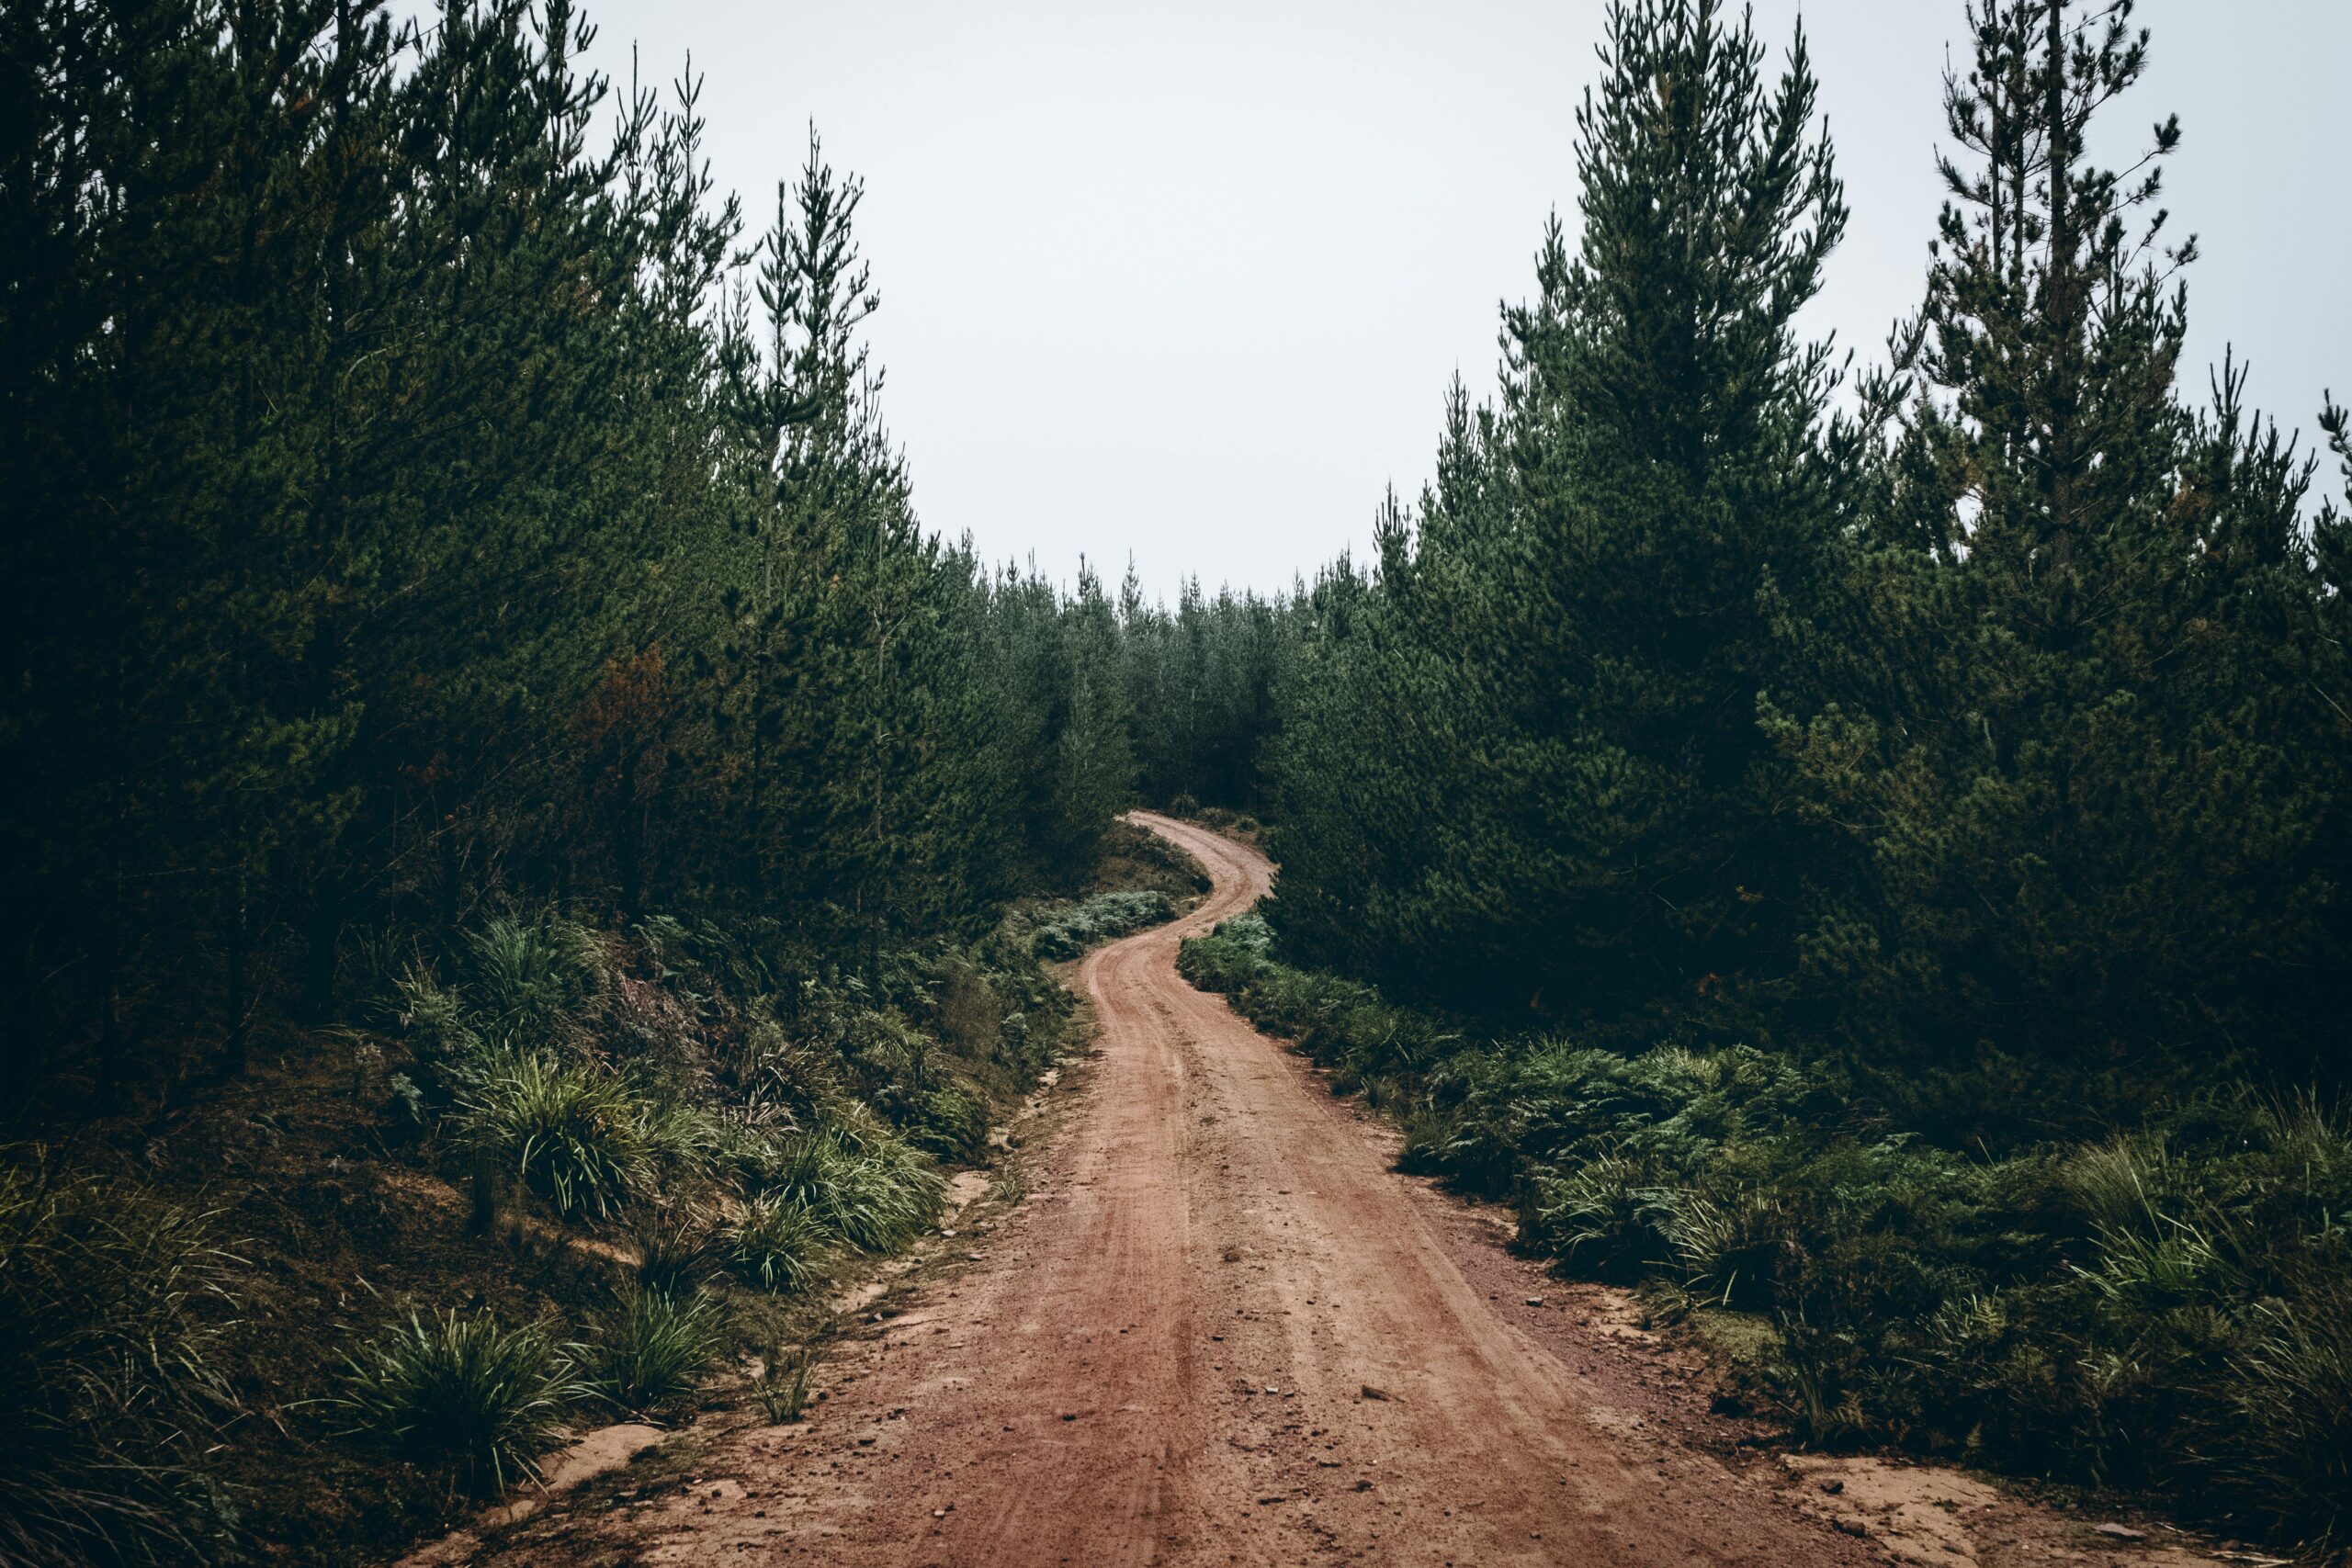 A winding dirt road through evergreen trees